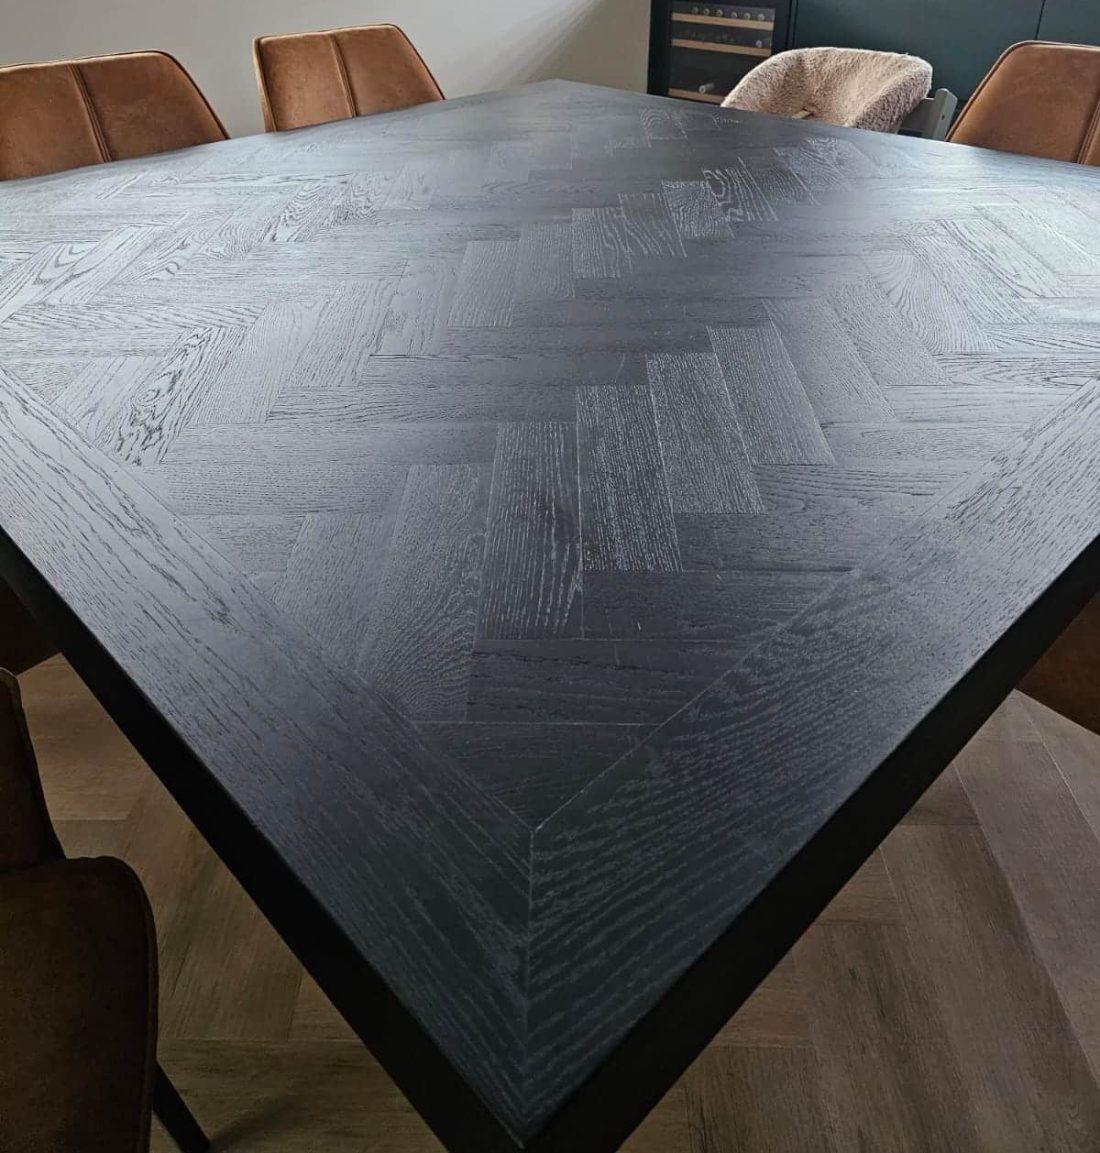 Mosina herringbone oak table 160 x 160 x 8cm square in black with matrix base 10 x 10cm bare steel